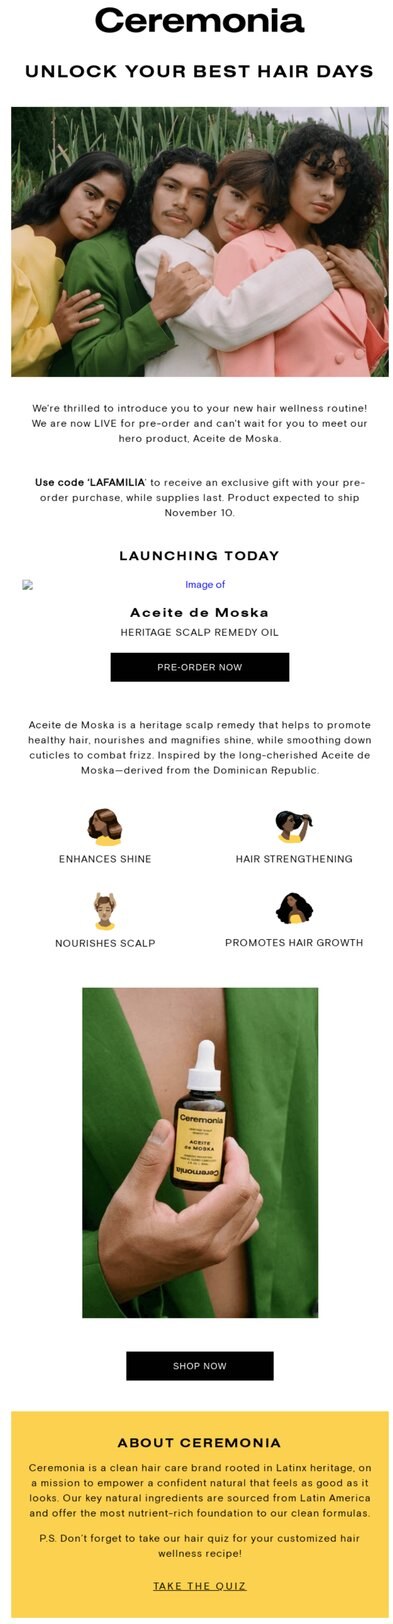 Hair care email example: Ceremonia